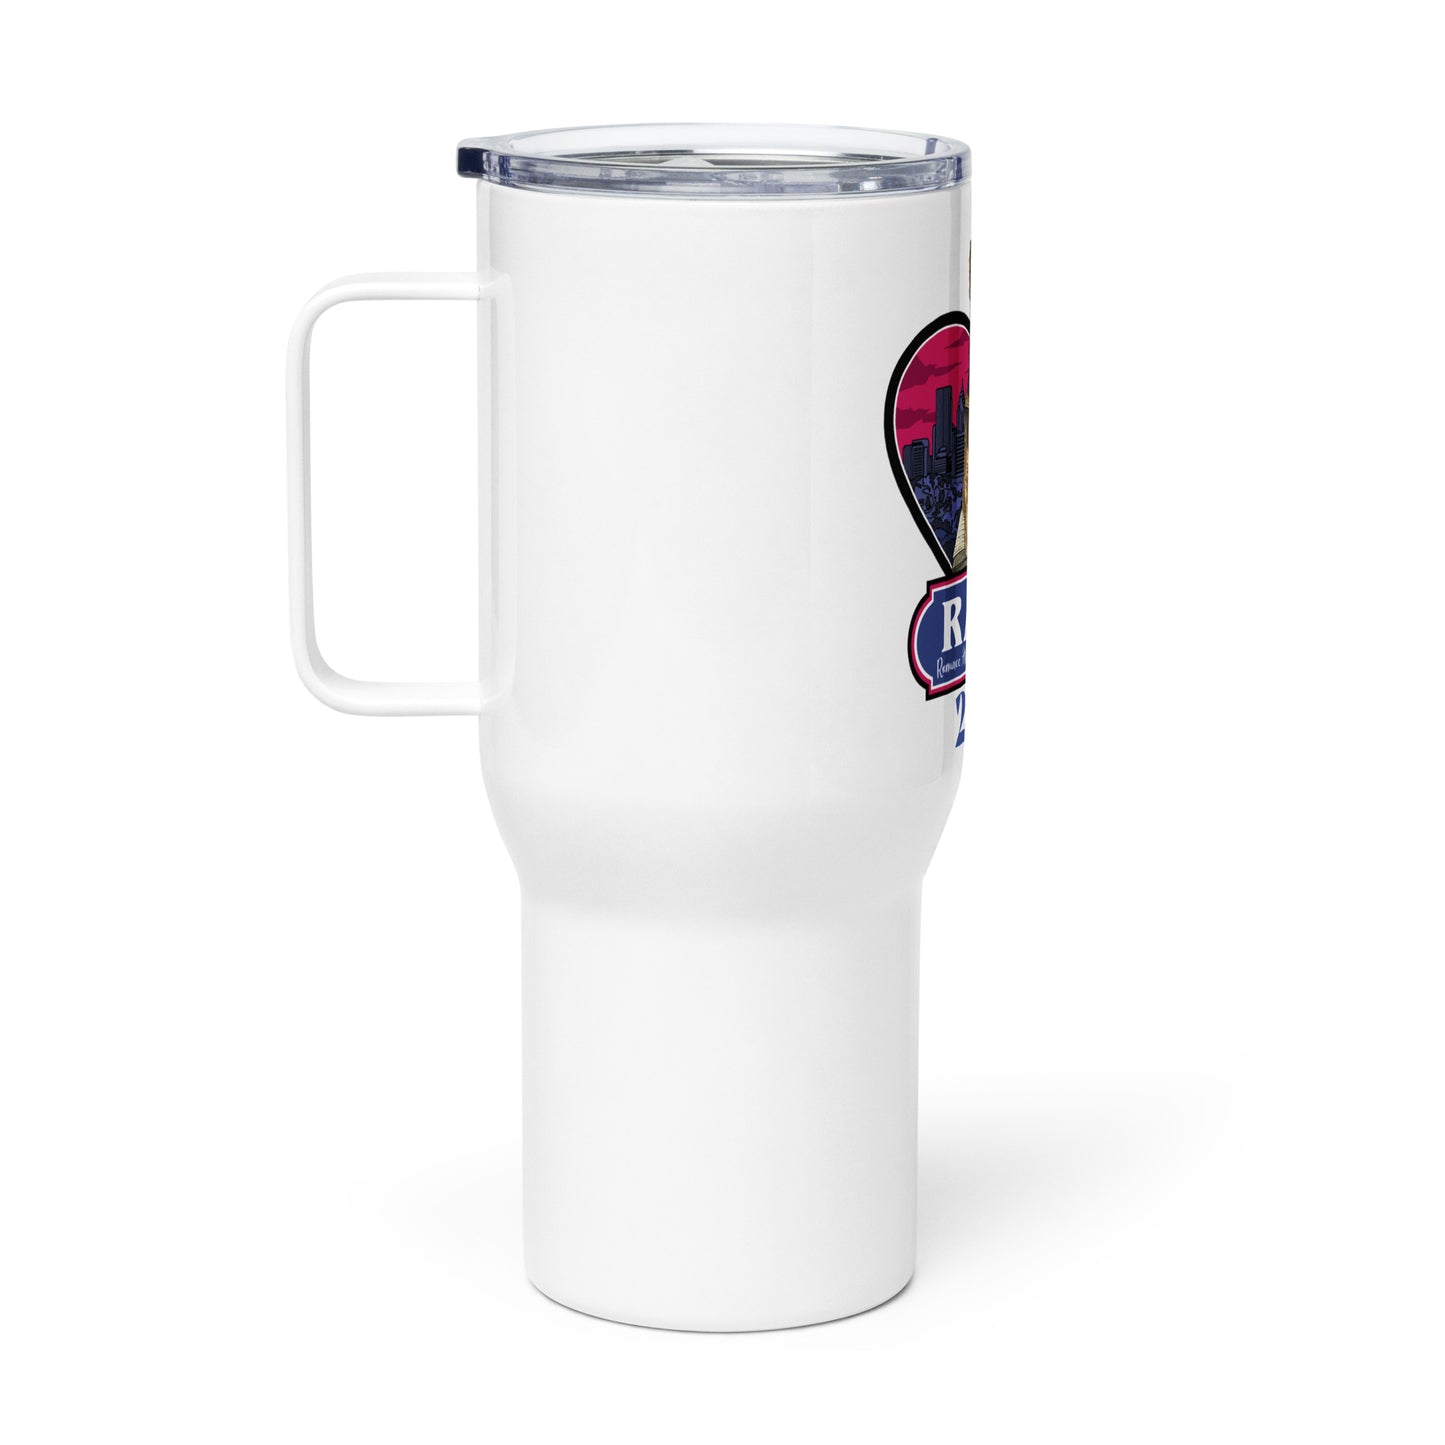 RAWR 2024 Travel mug with a handle